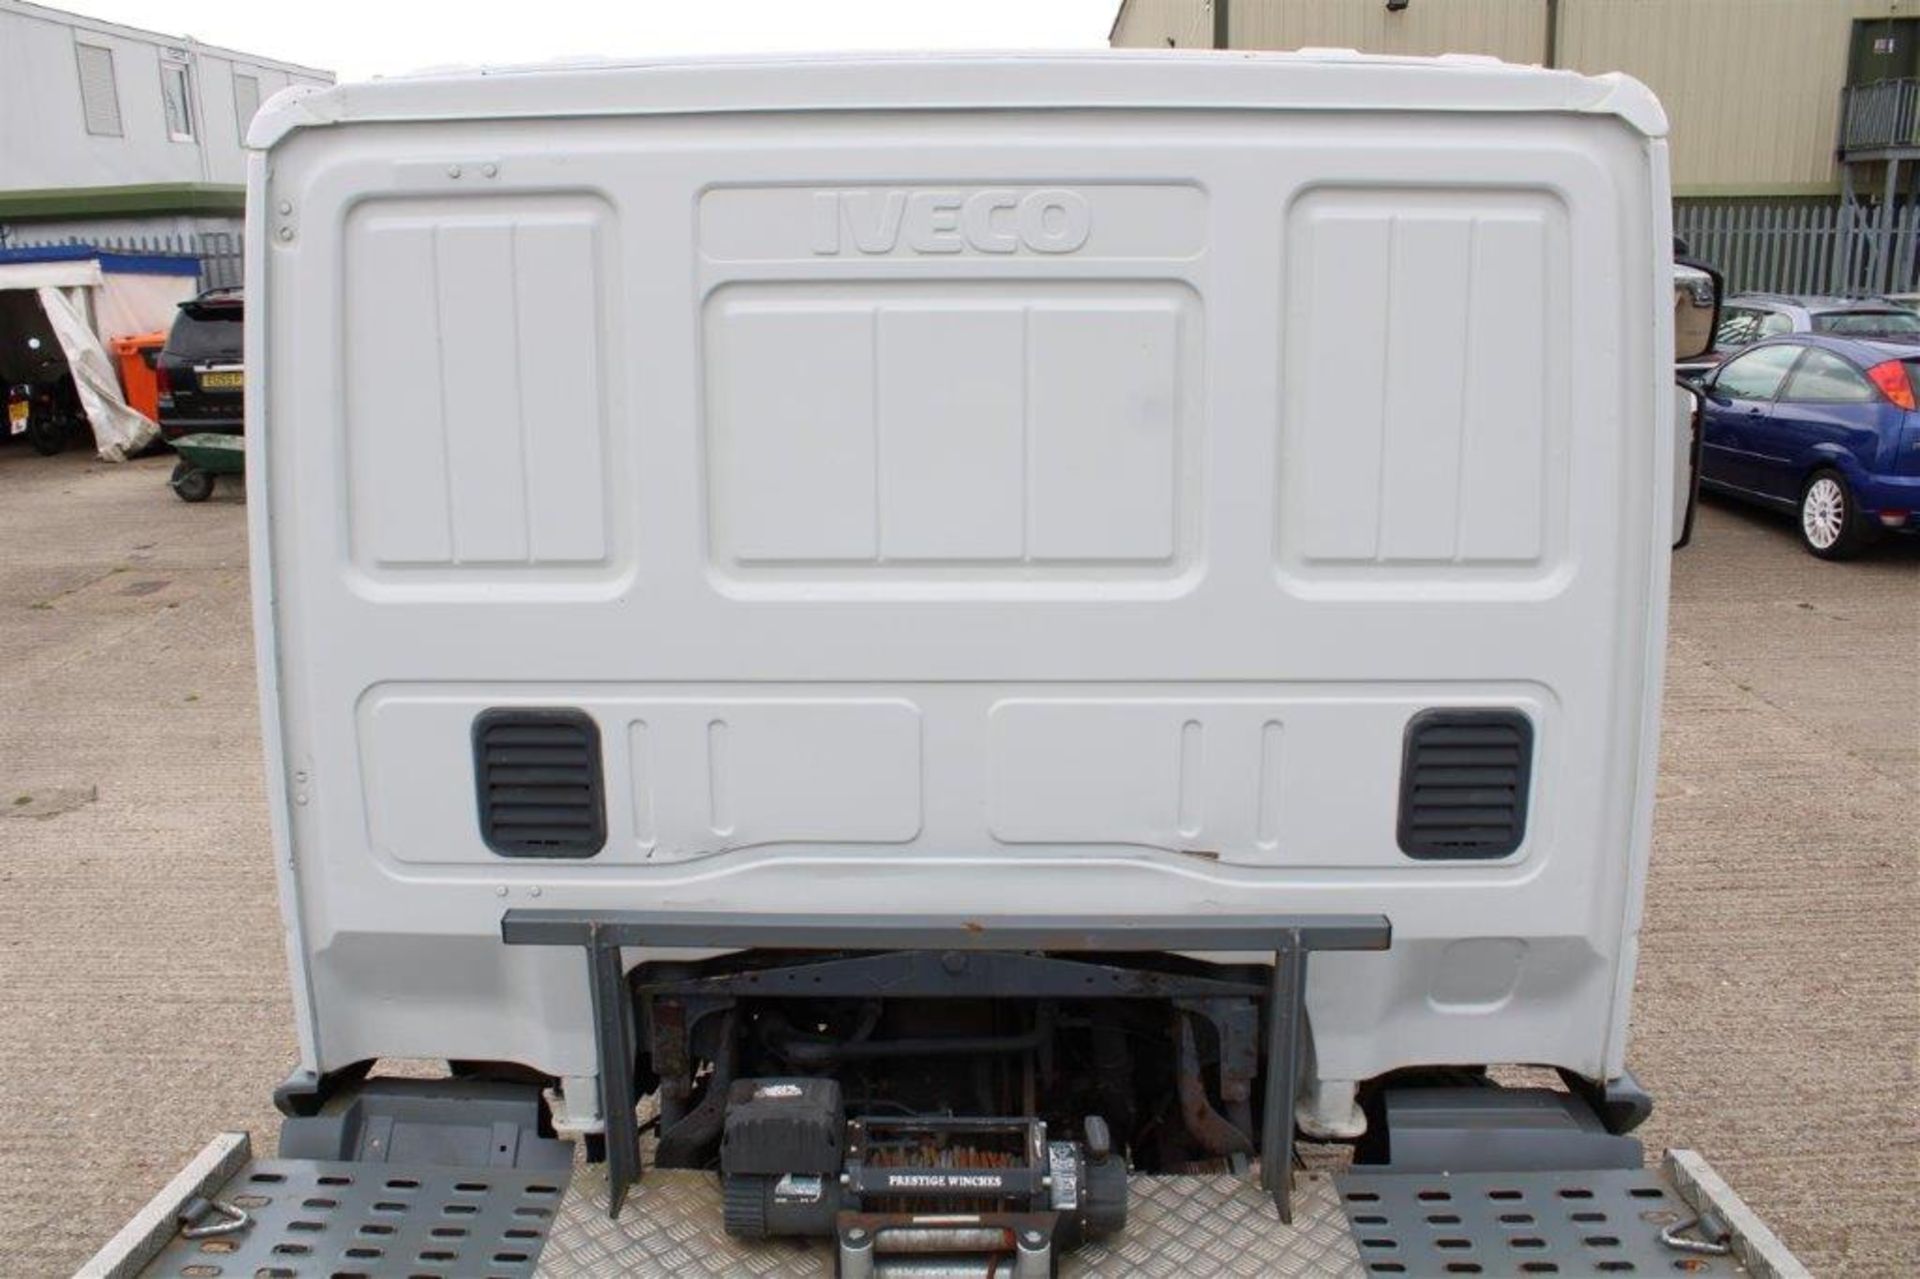 59 09 Iveco Breakdown Truck - Image 36 of 44